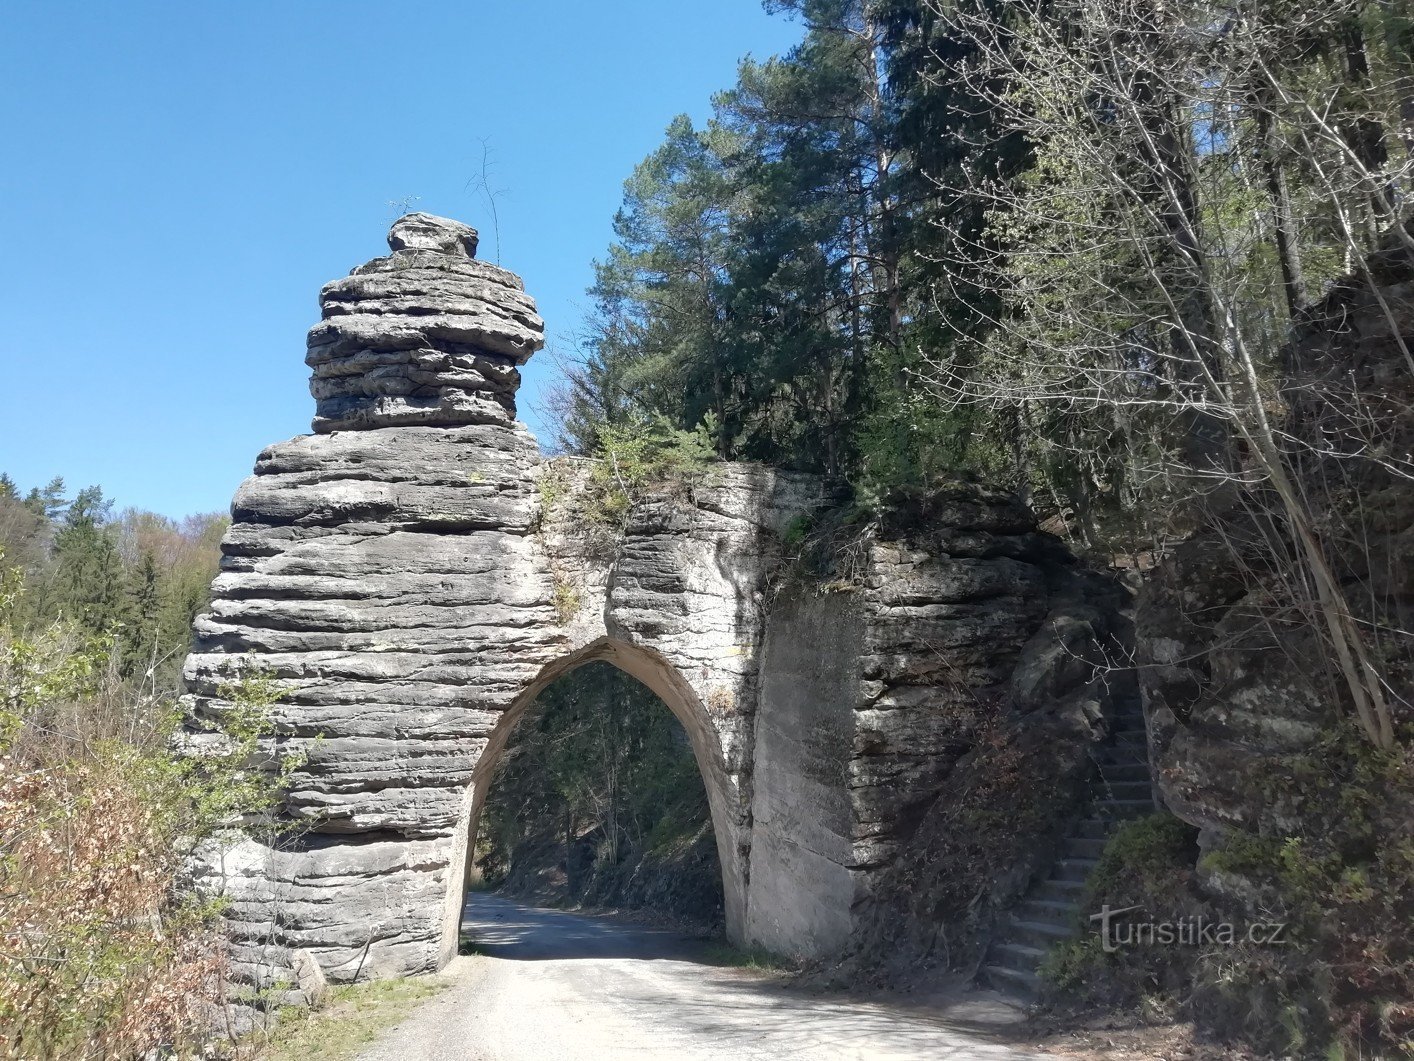 Bohemian Paradise and an interesting road tunnel - Pekařova brána